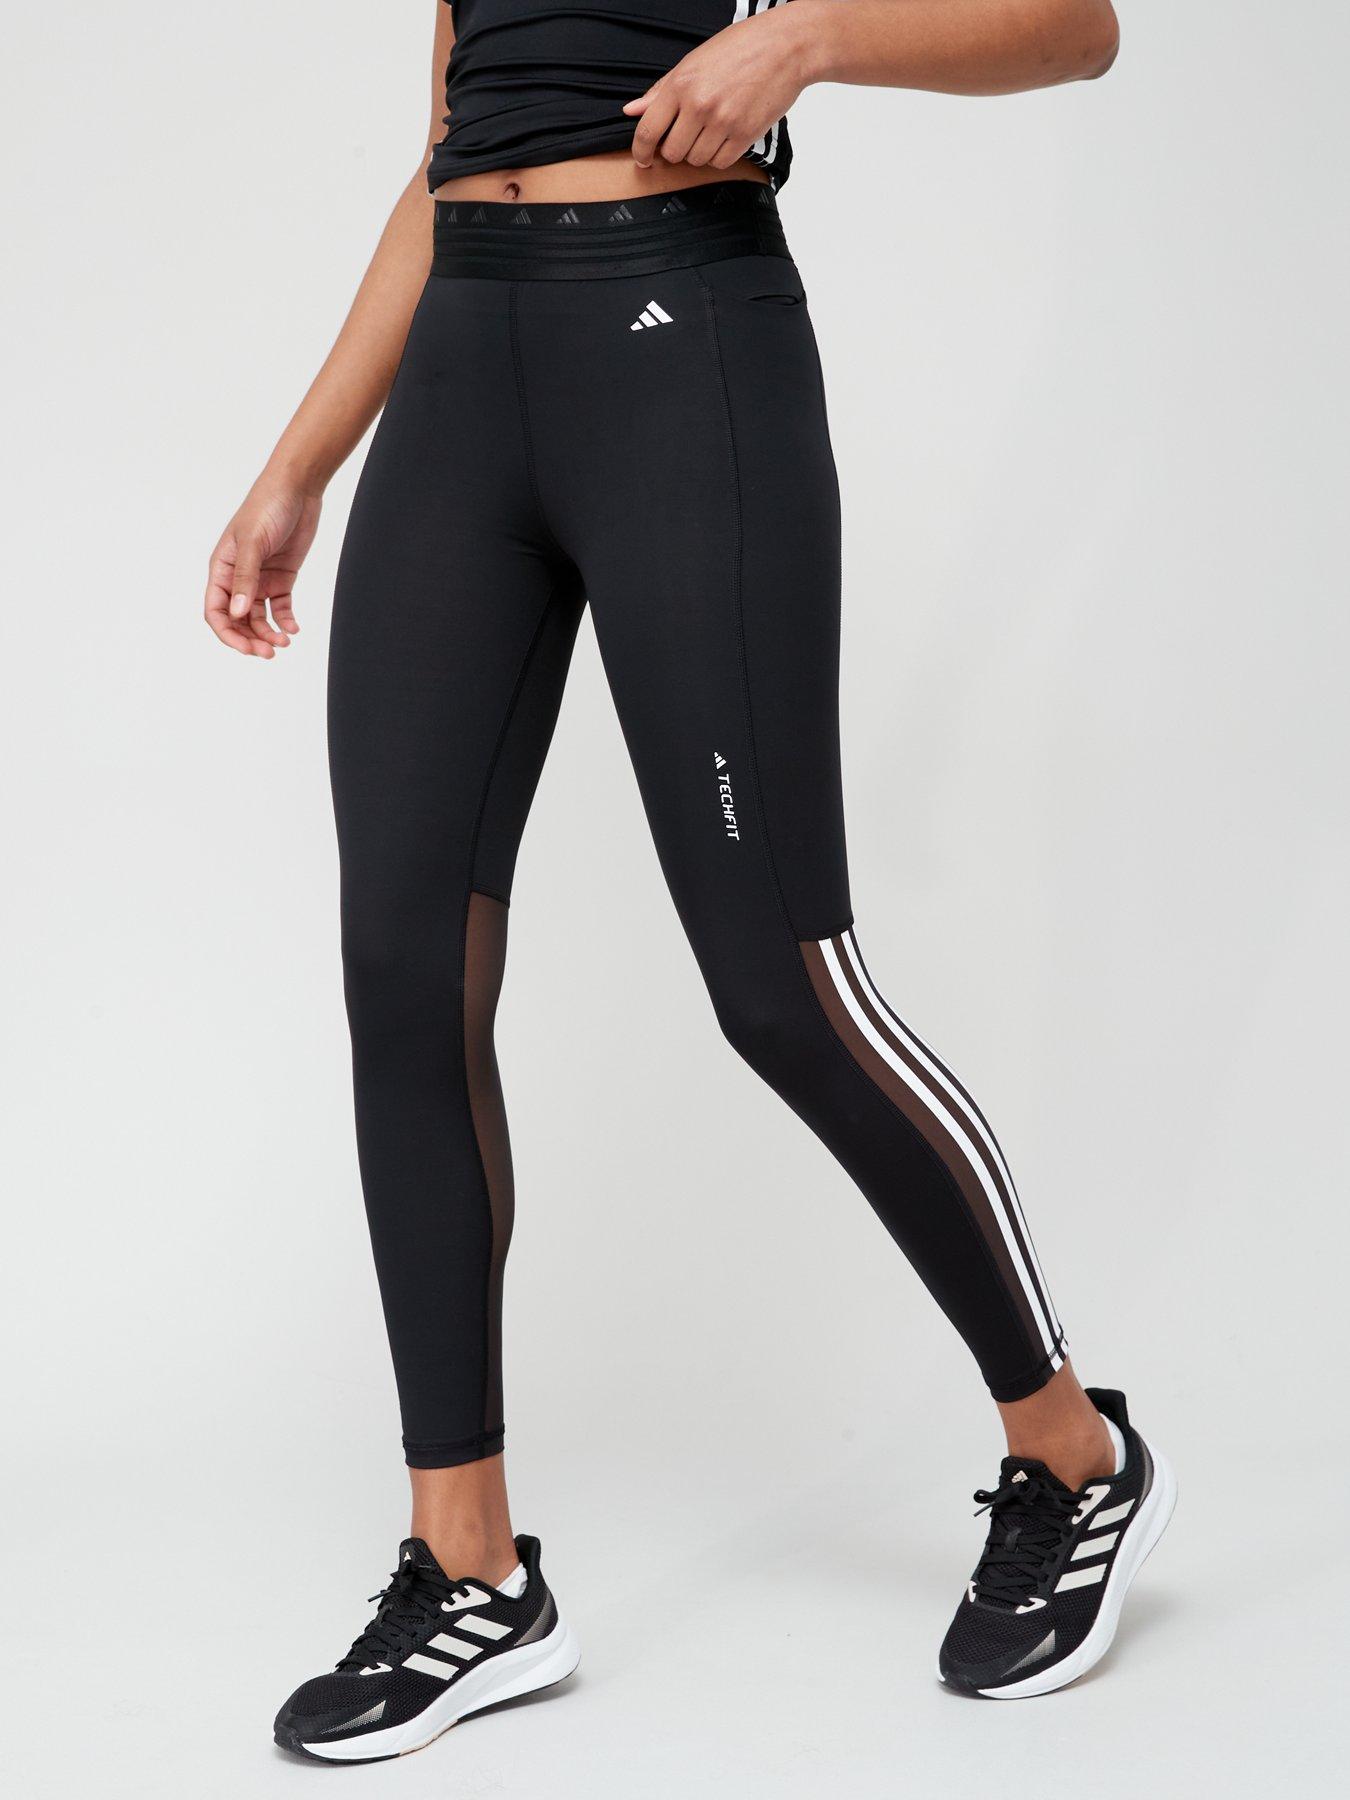 Adidas Womens Small Athletic Leggings Black White Leg Stripes Aeroready  Pocket